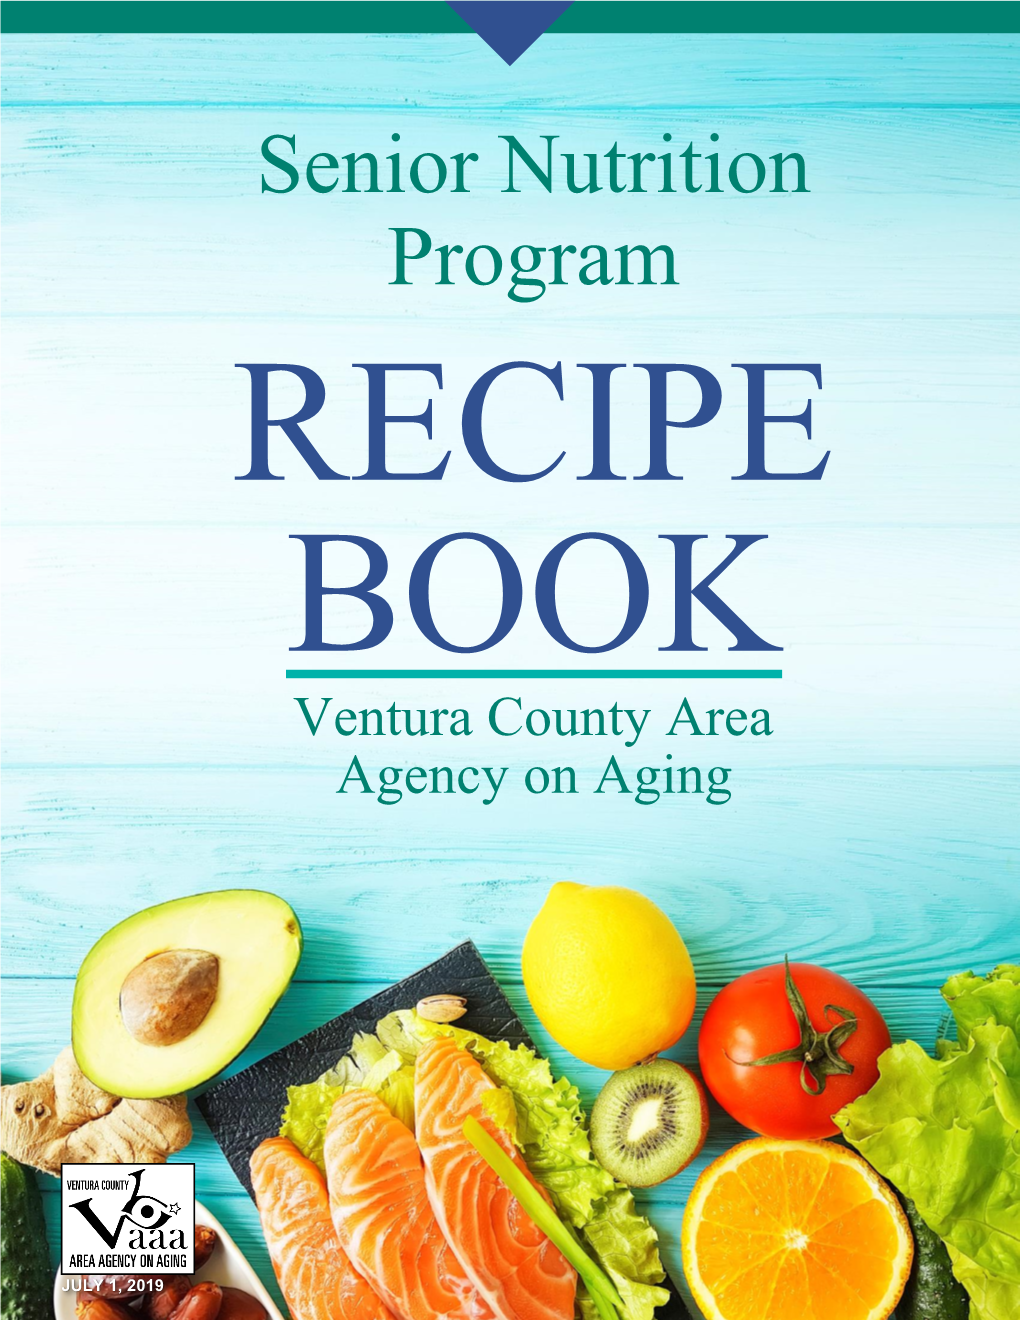 Senior Nutrition Program RECIPE BOOK Ventura County Area